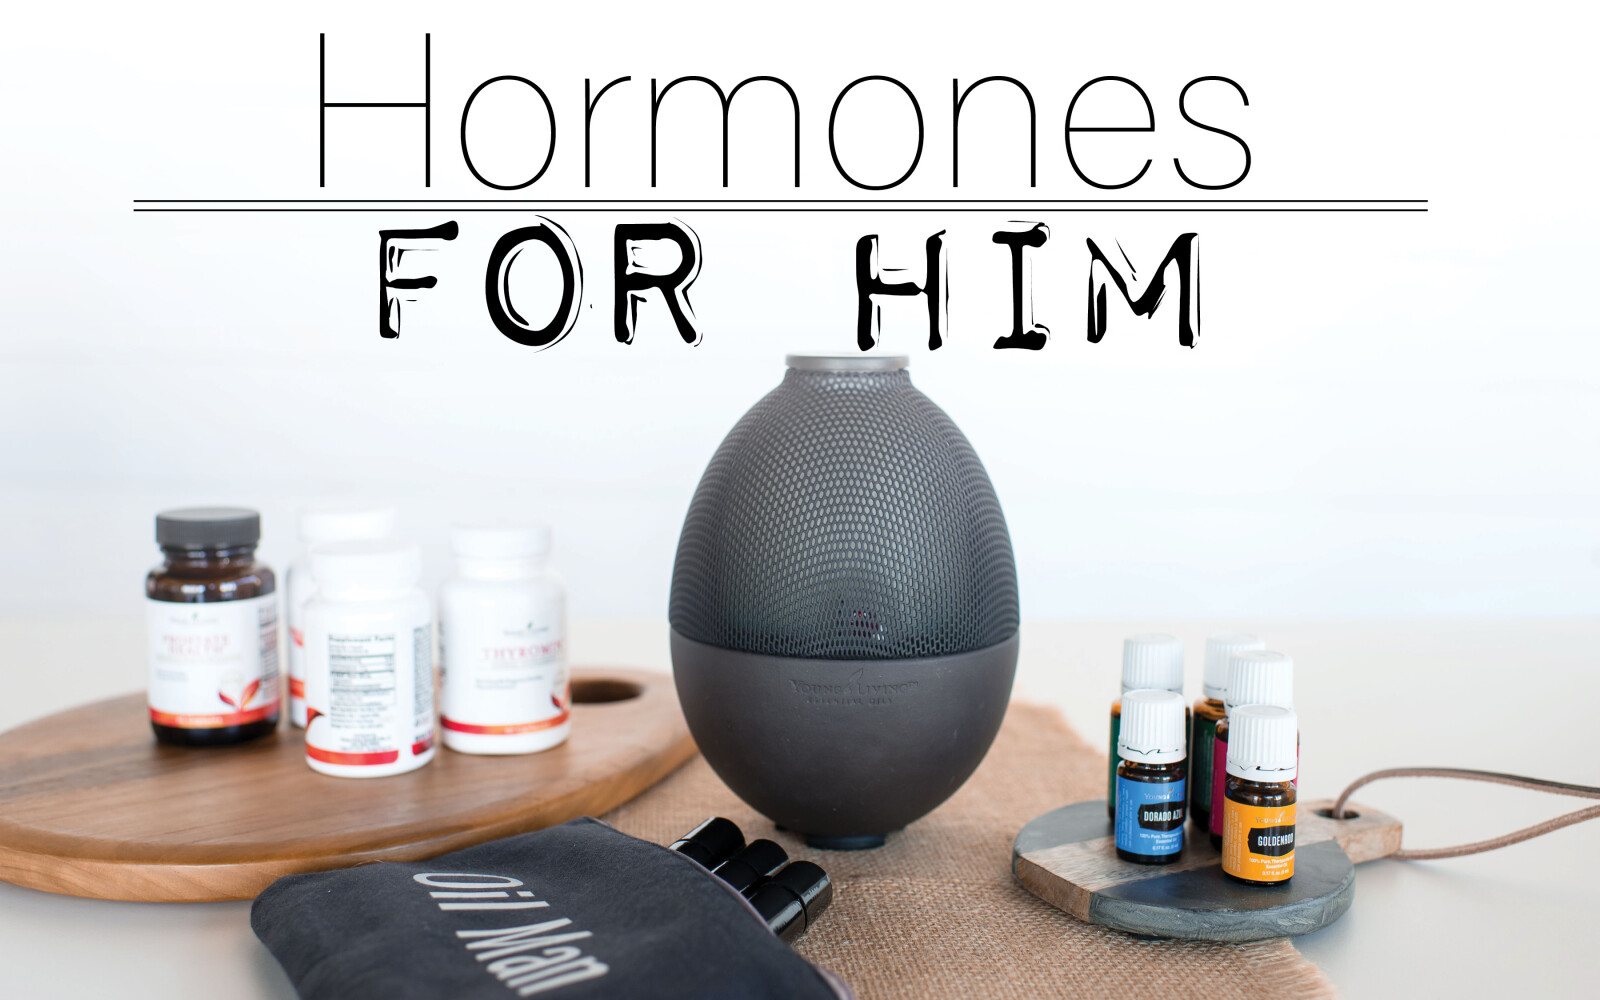 👔 Hormones for Him!